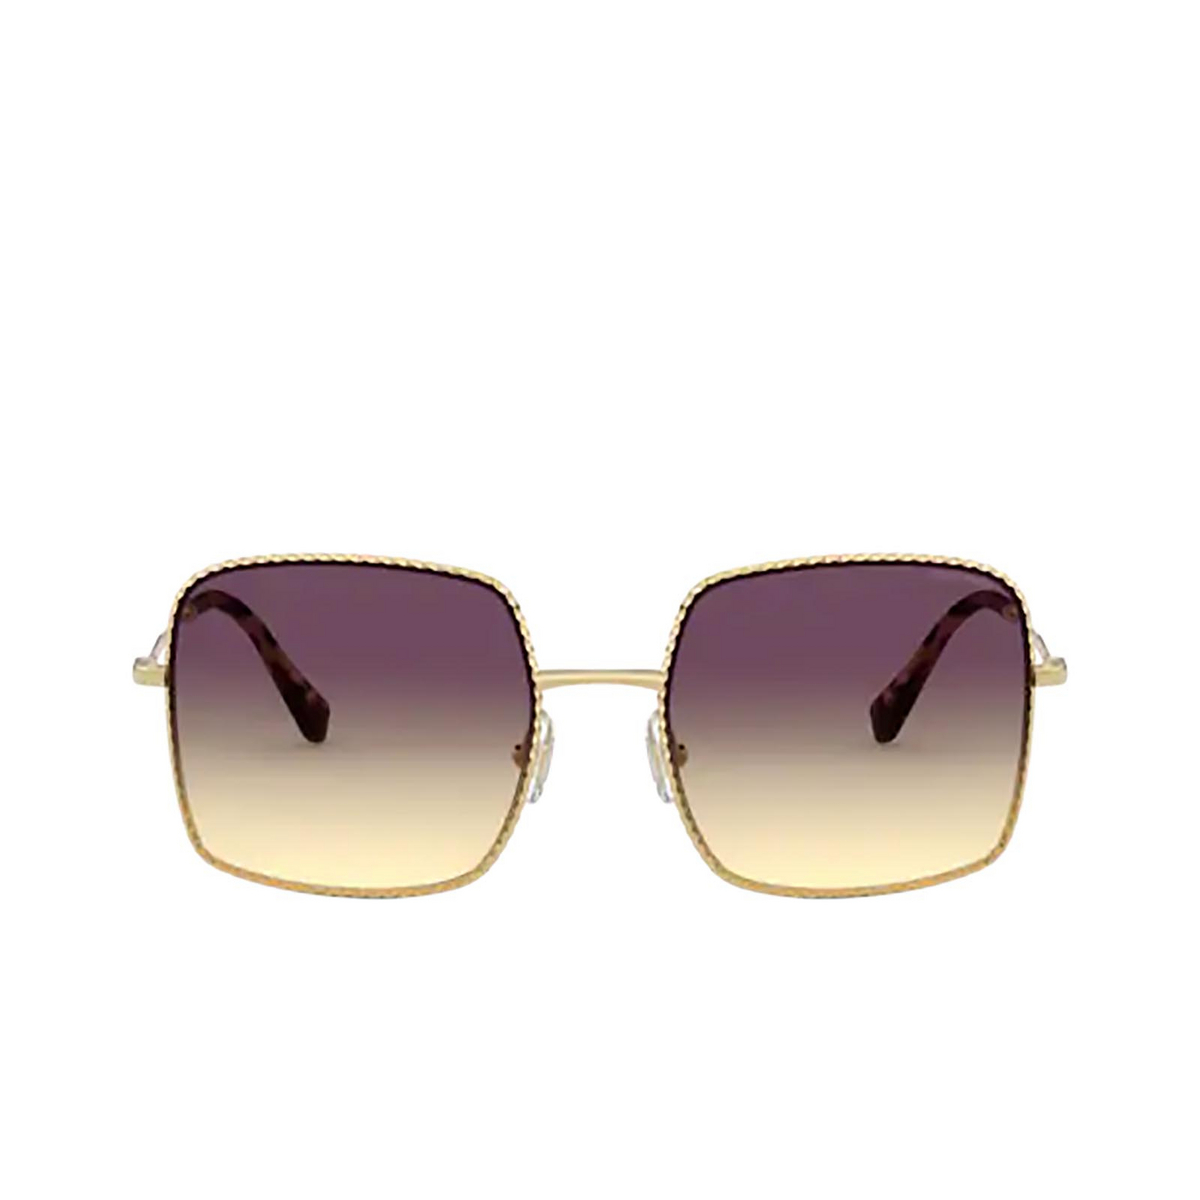 Miu Miu® Square Sunglasses: MU 61VS color Gold 5AK09B - front view.